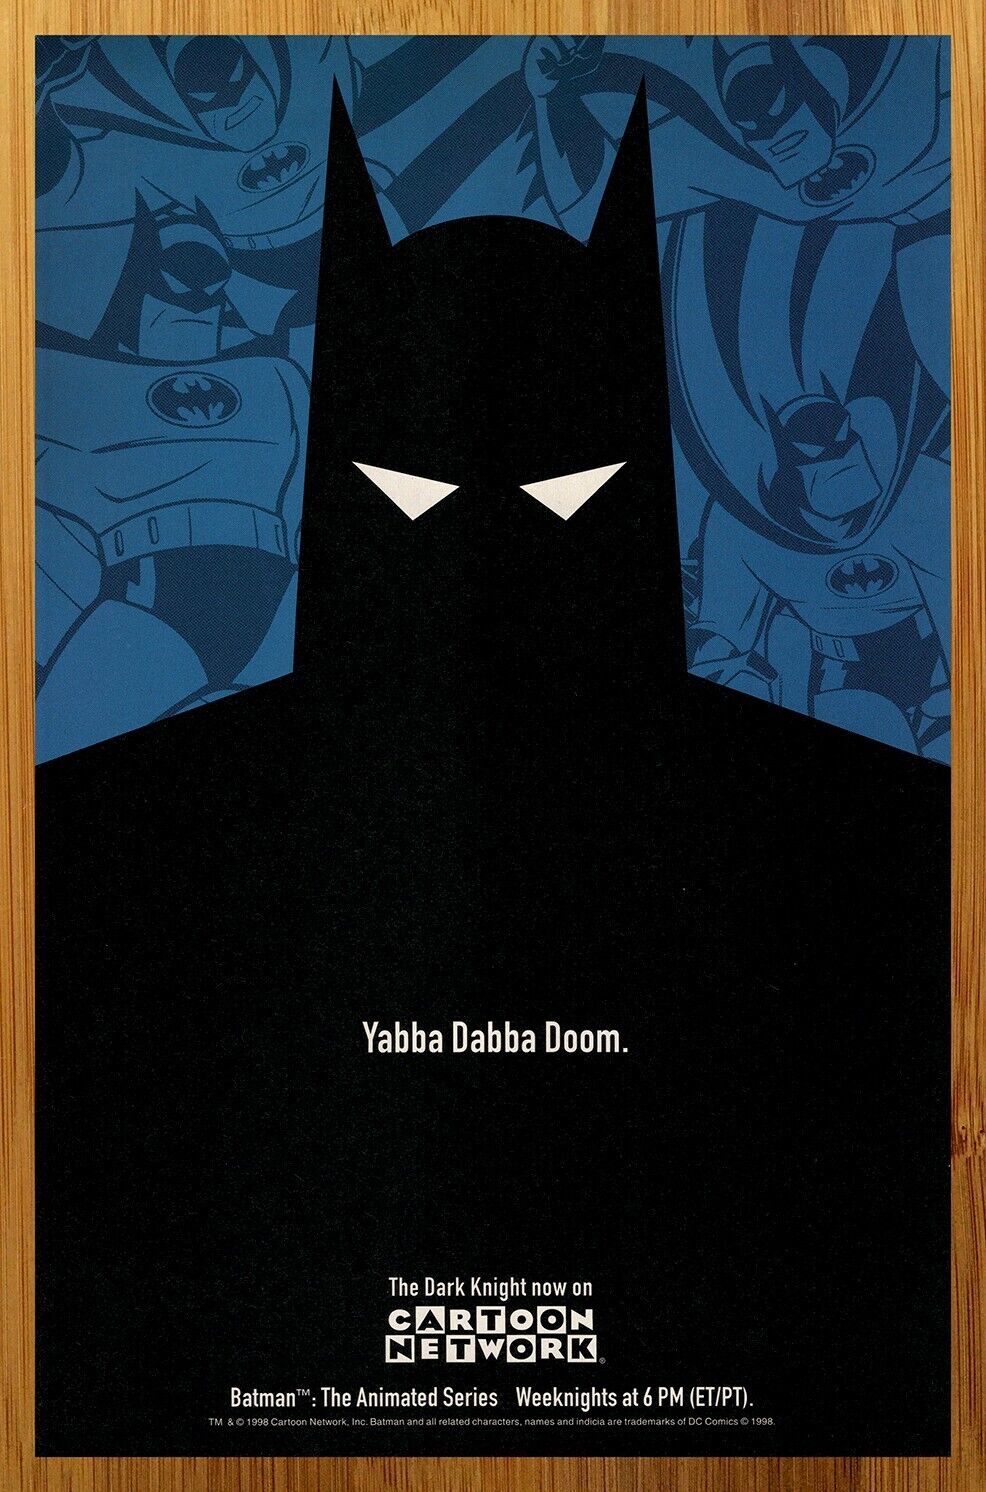 1998 Batman The Animated Series Print Ad/Poster BTAS Cartoon Network 90's Retro